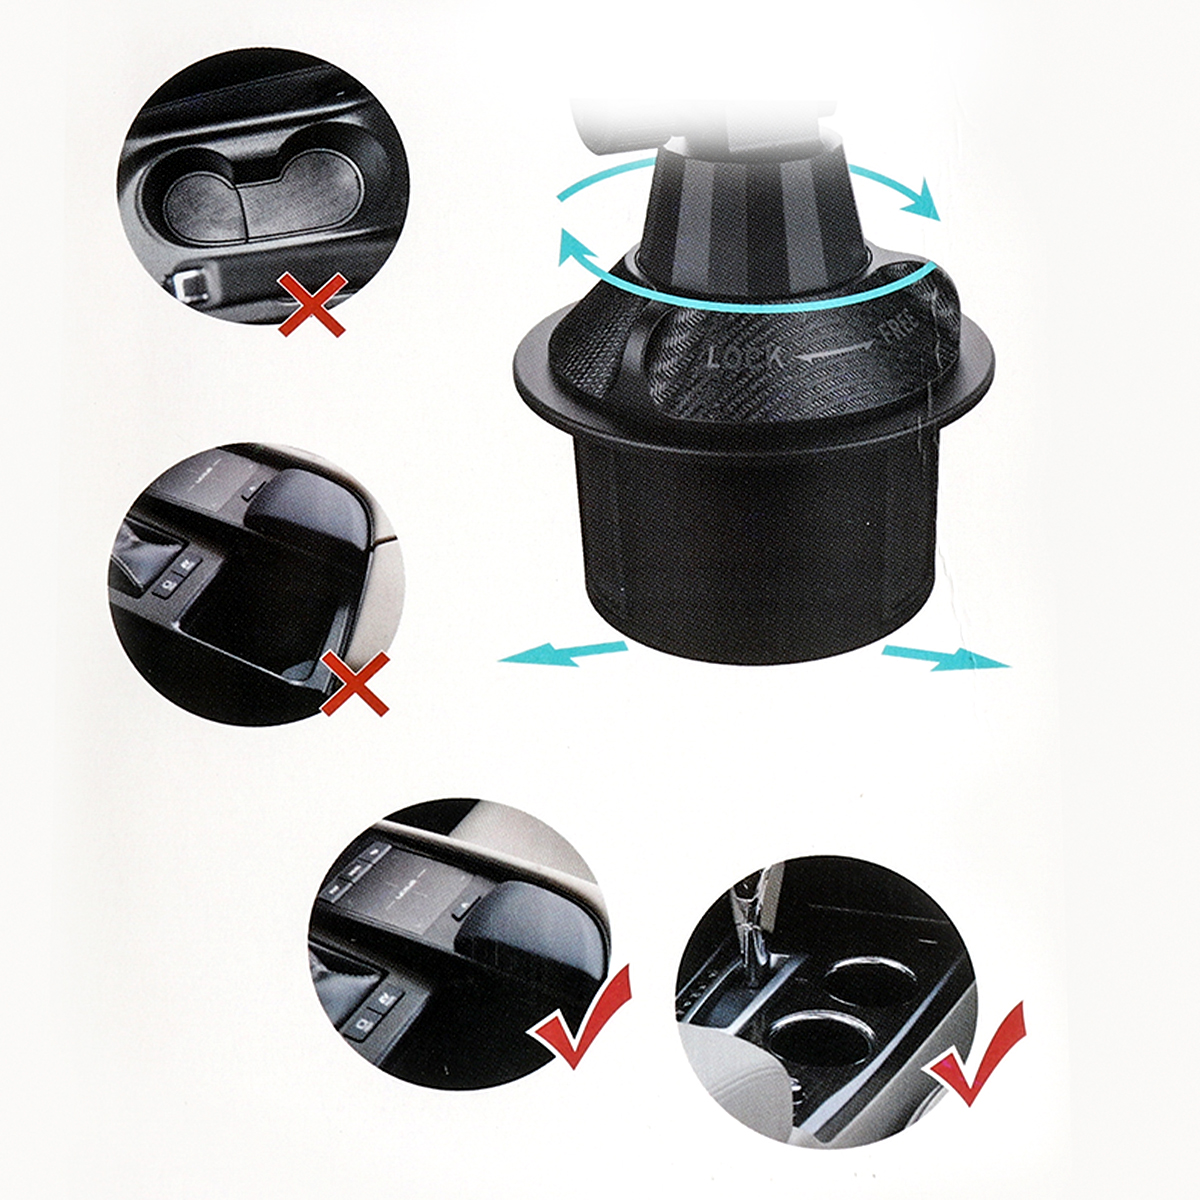 Upgrade-Version-360deg-Rotation-Car-Phone-Mount-Gooseneck-Water-Cup-Holder-Bracket-for-4-6-inch-Devi-1777135-6